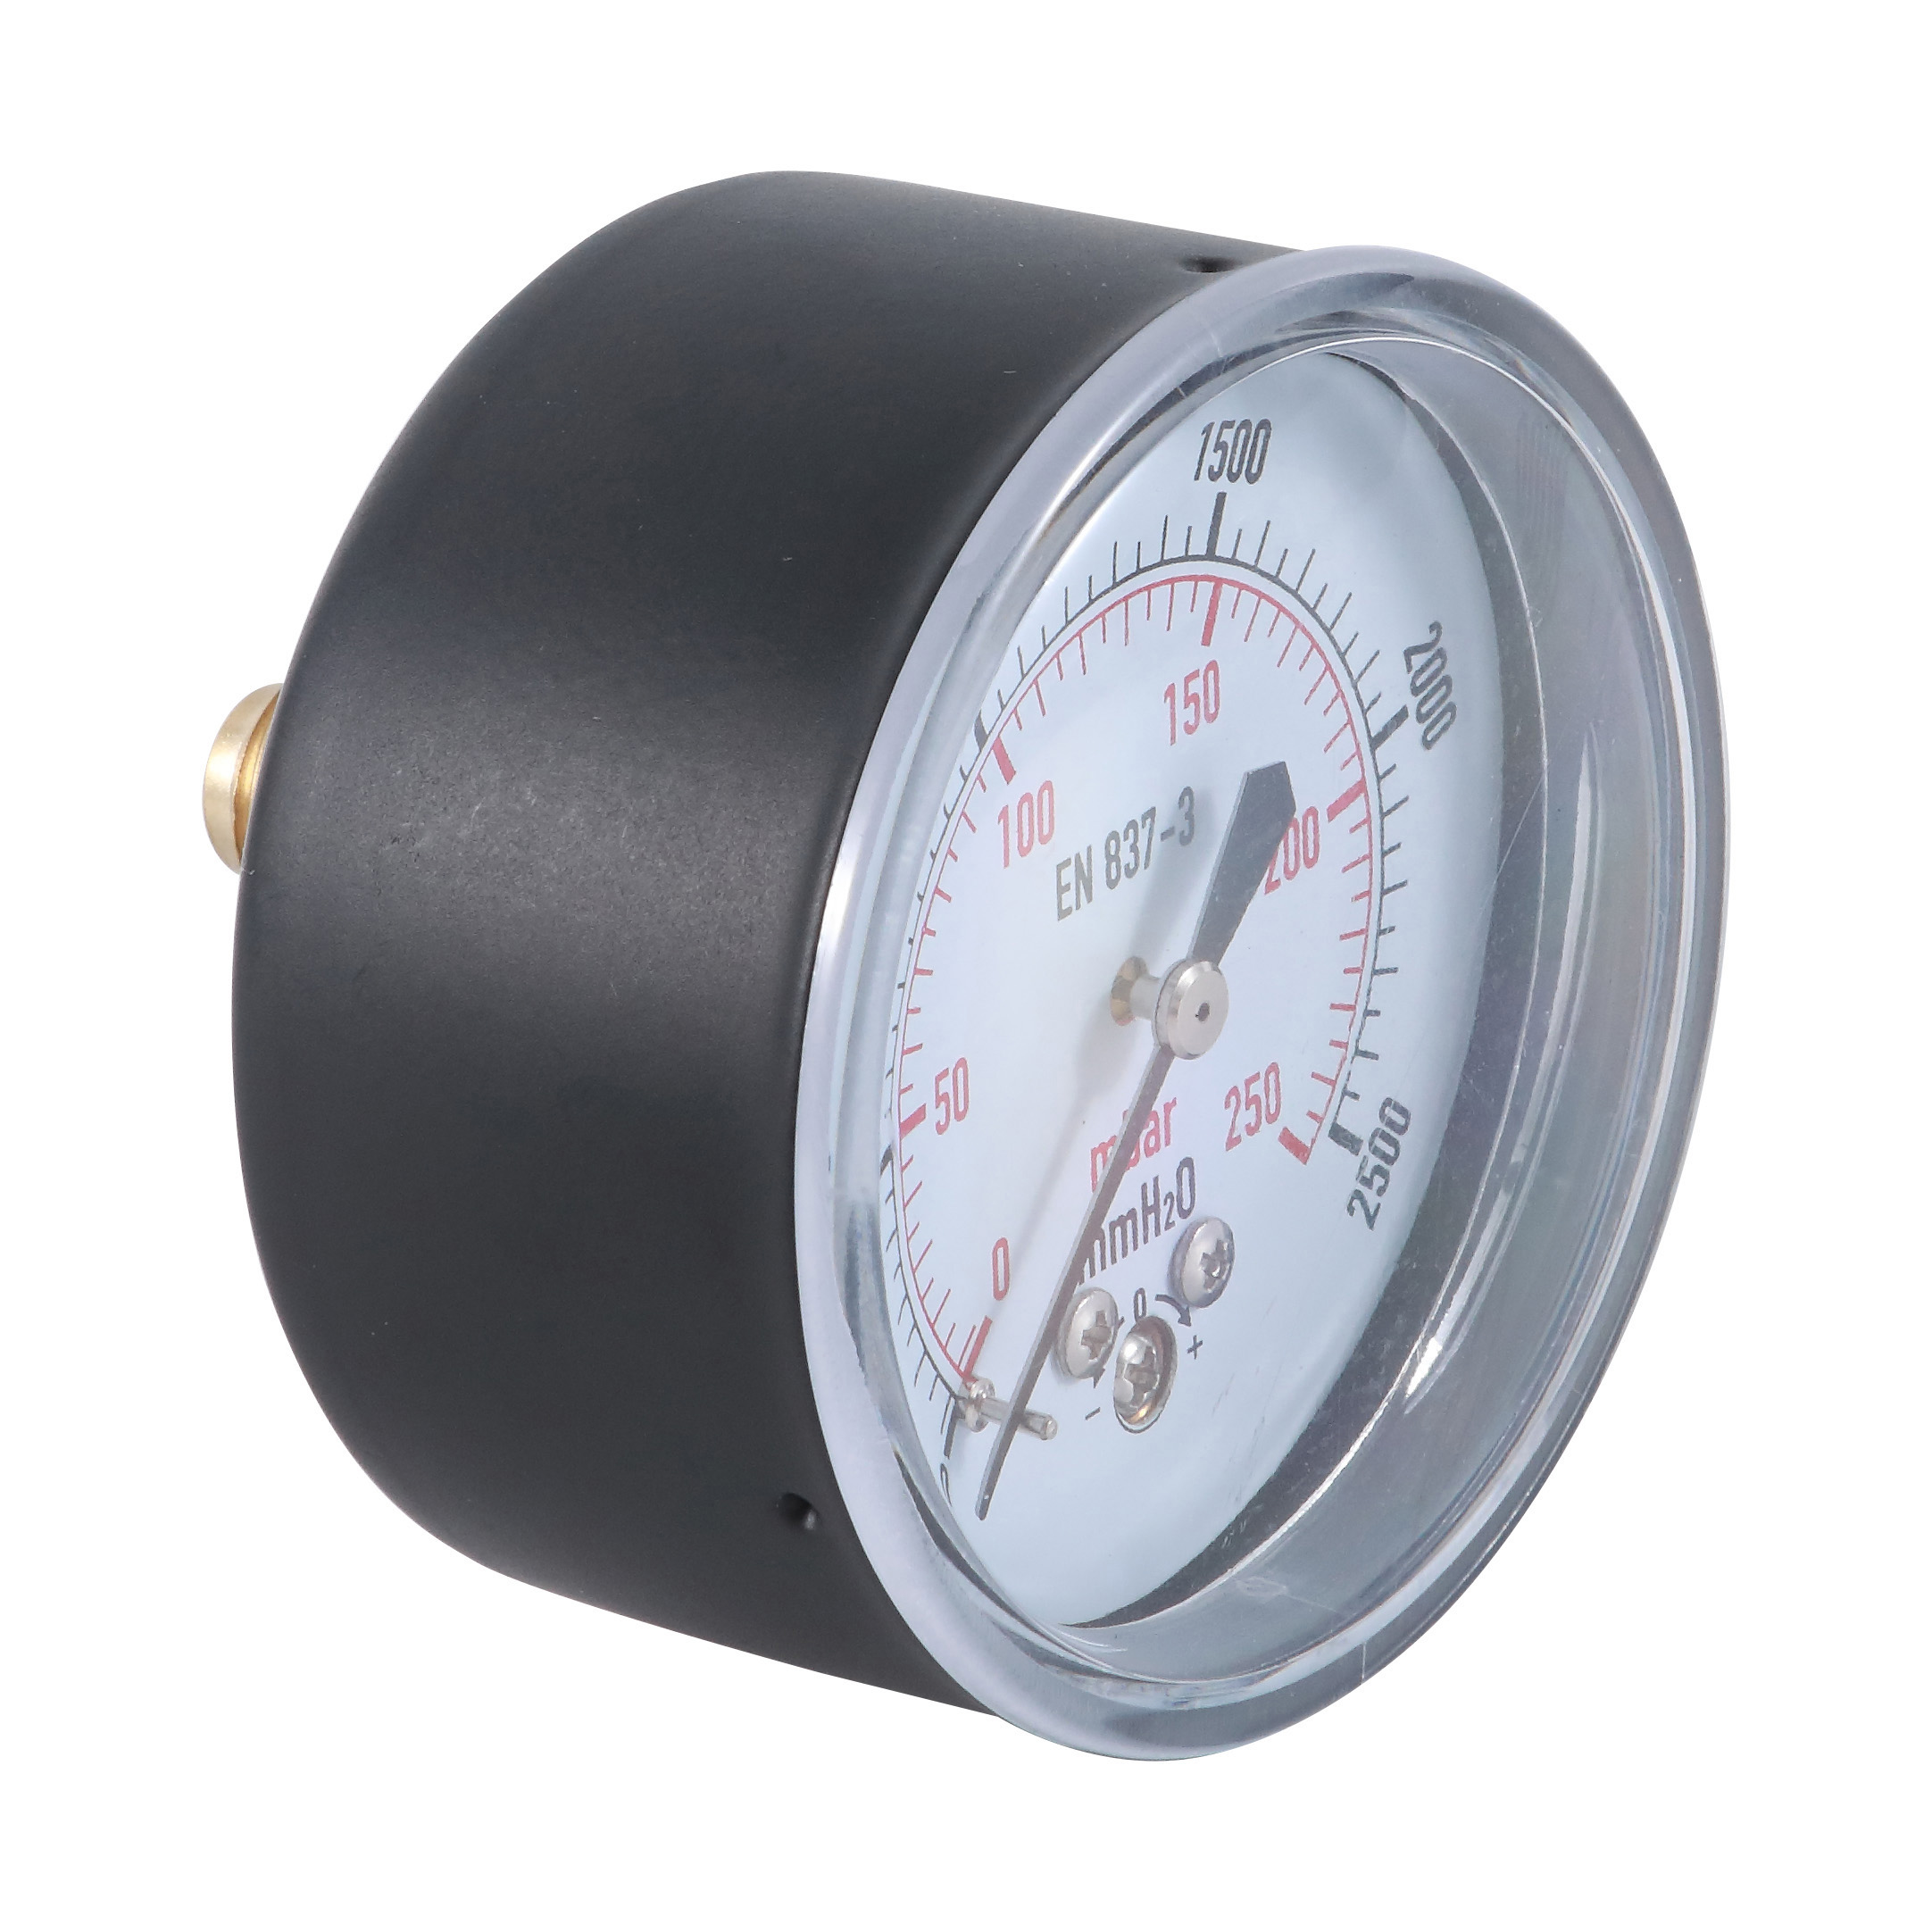 Dry pressure gauge  back connection  black steel/plastic case  brass connection